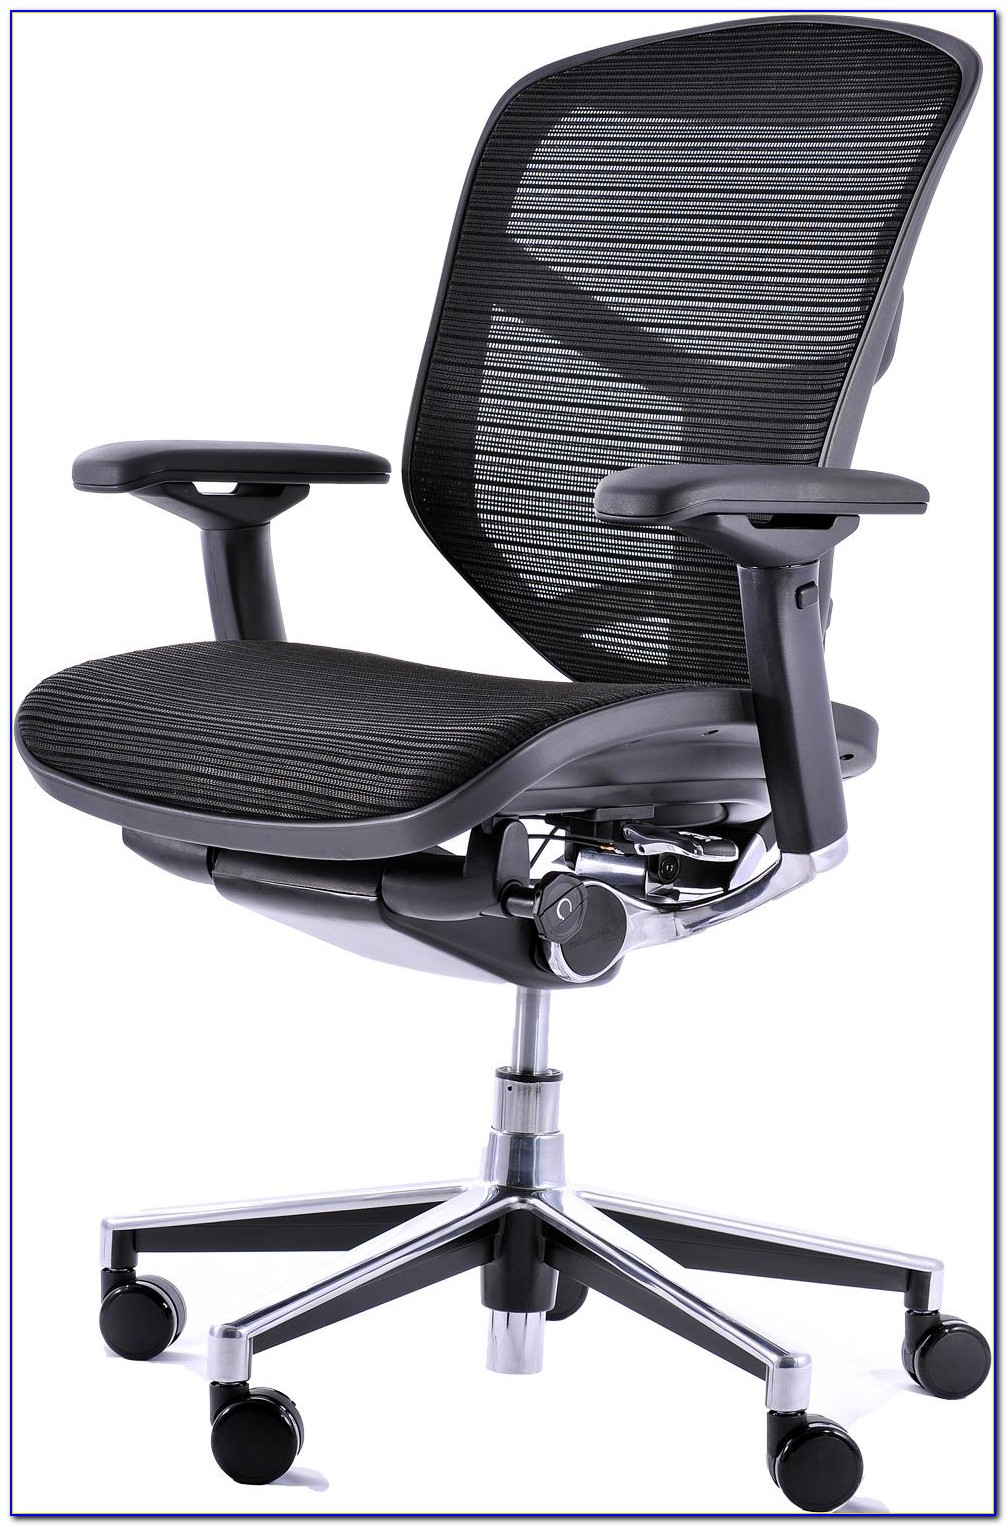 Ergonomic Mesh Office Chairs Uk - Desk : Home Design Ideas #1aPXwXXQXd76134